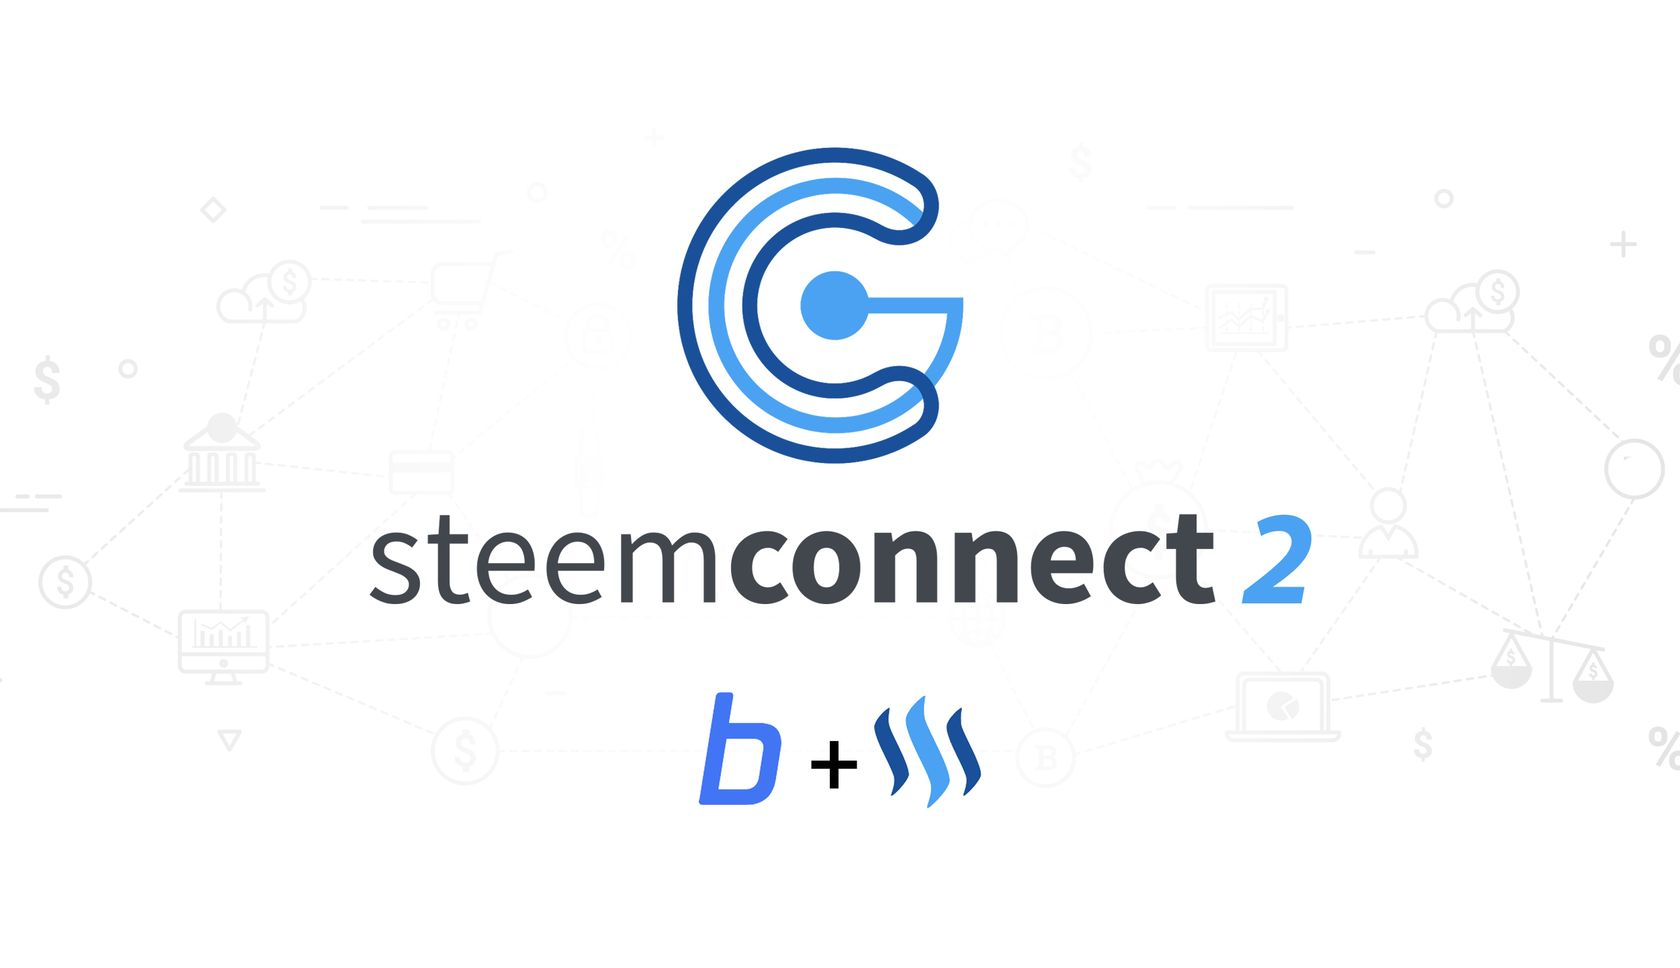 steemconnect image